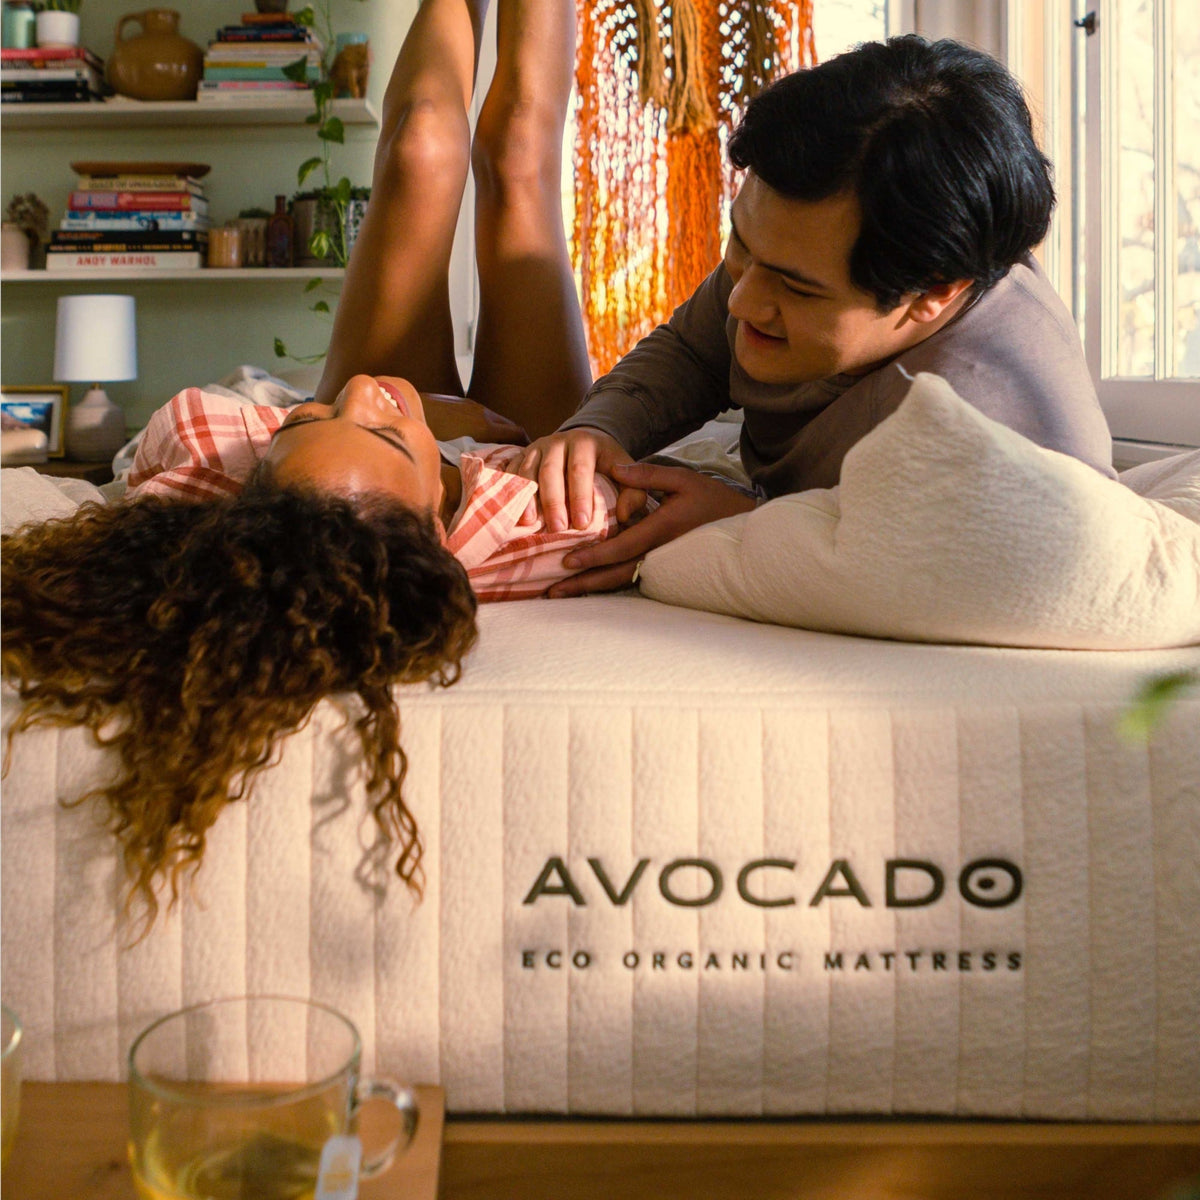 Affordable Mattress - The best organic mattress made in America - the Avocado Eco Organic Mattress